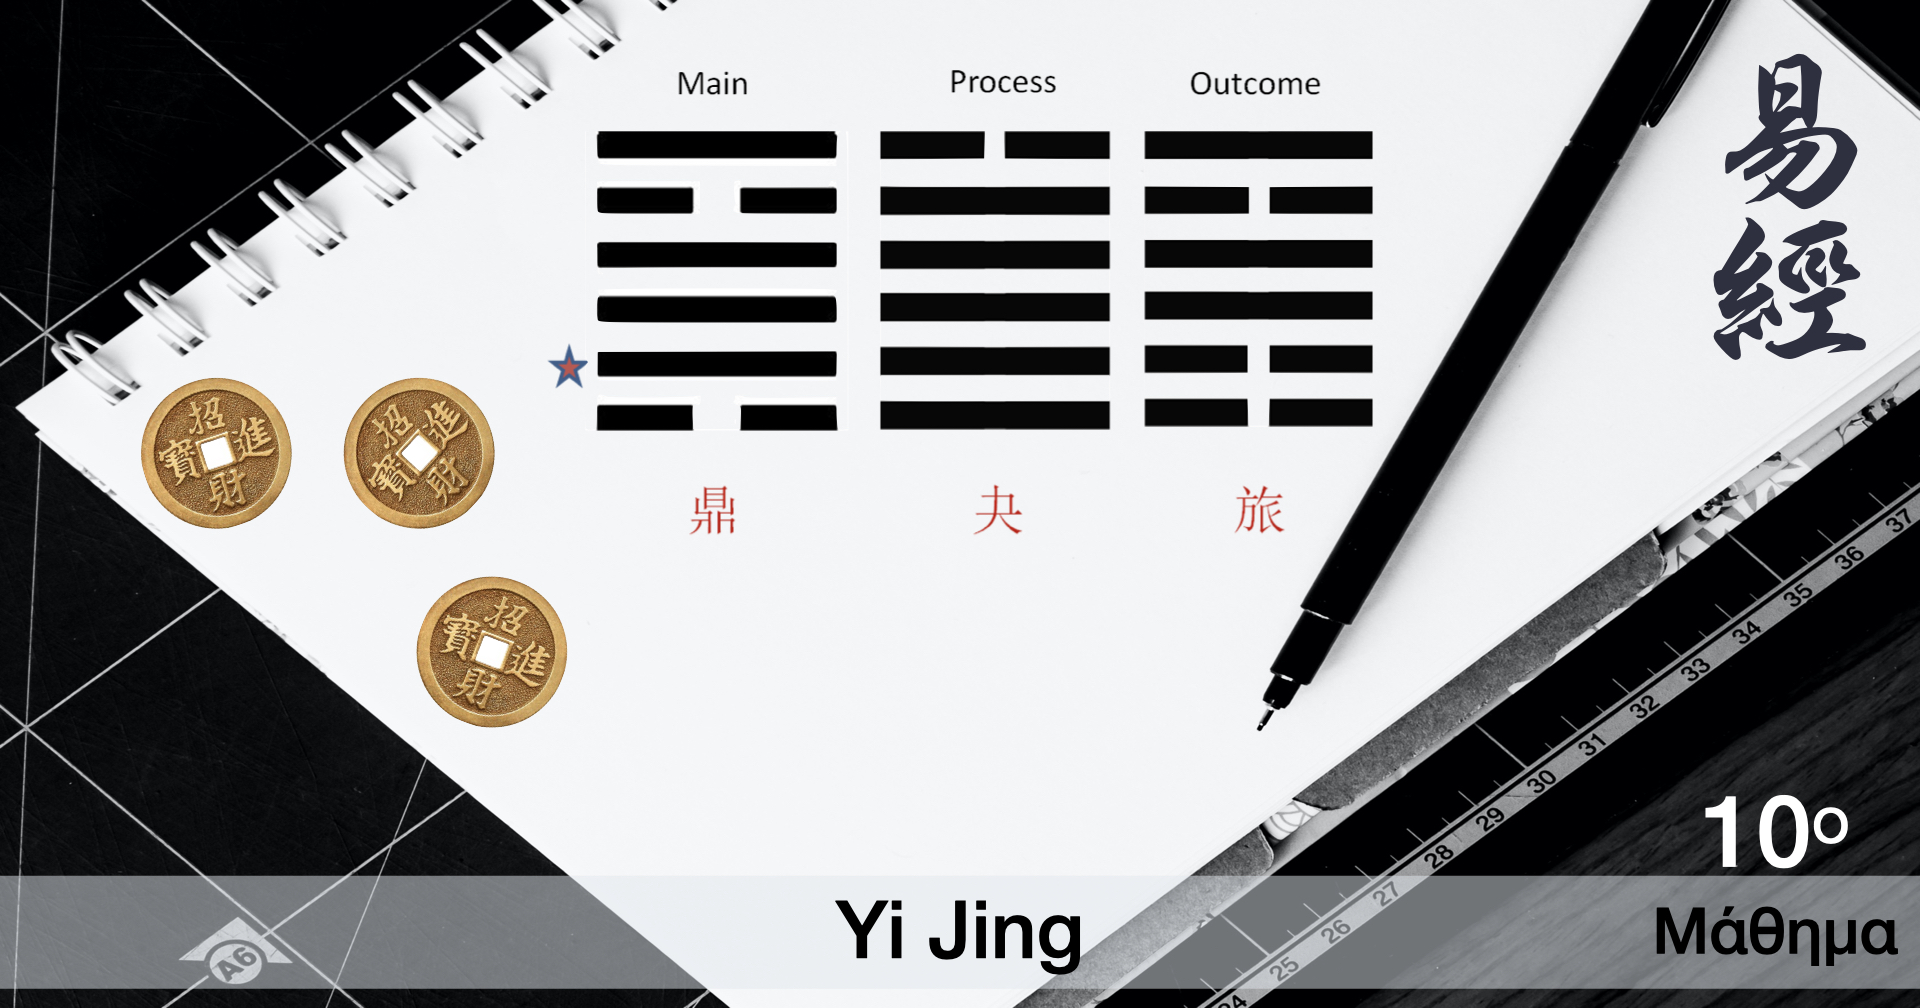 Yi Jing η Ρίψη των Νομισμάτων, Η Λόγια Μέθοδος